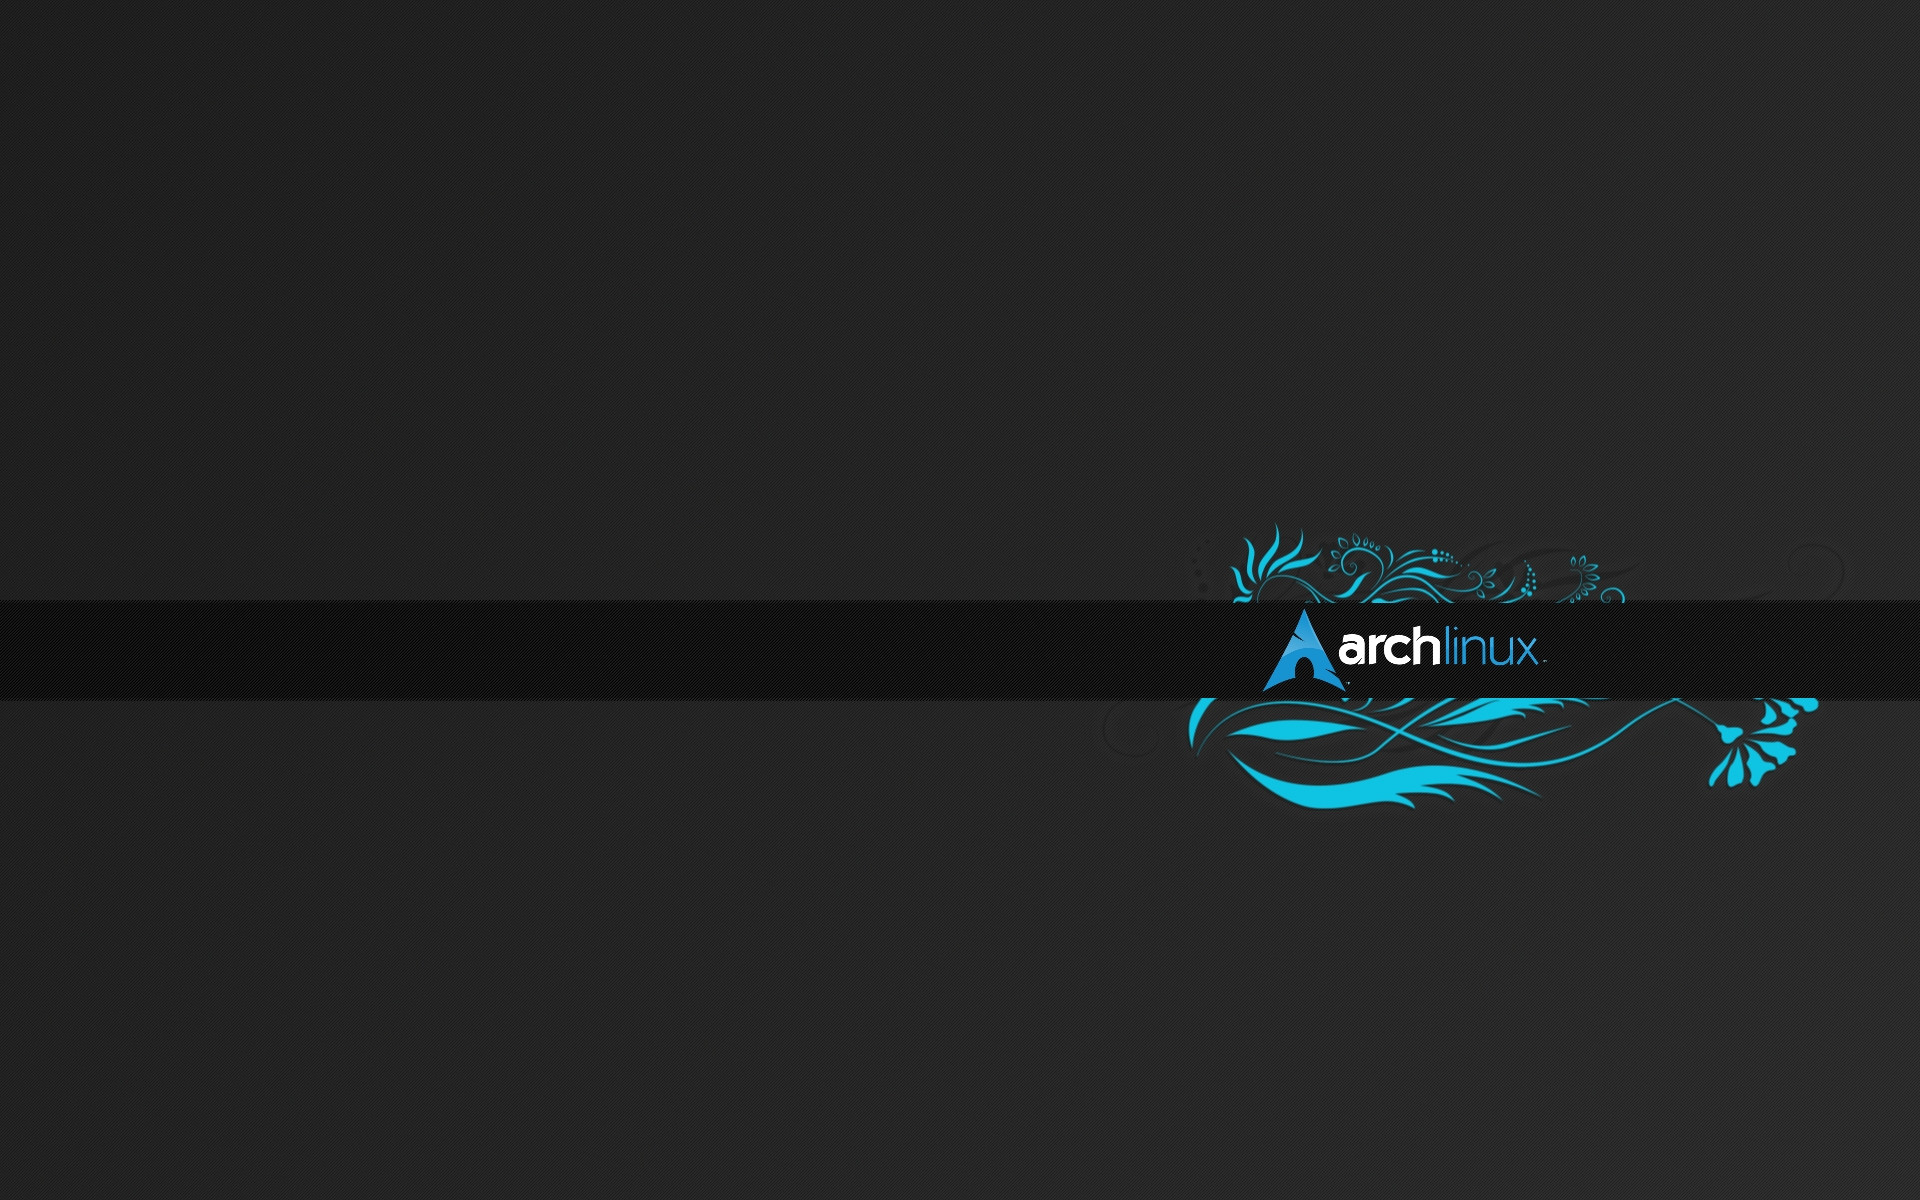 Archlinux Wallpaper Full HD Search